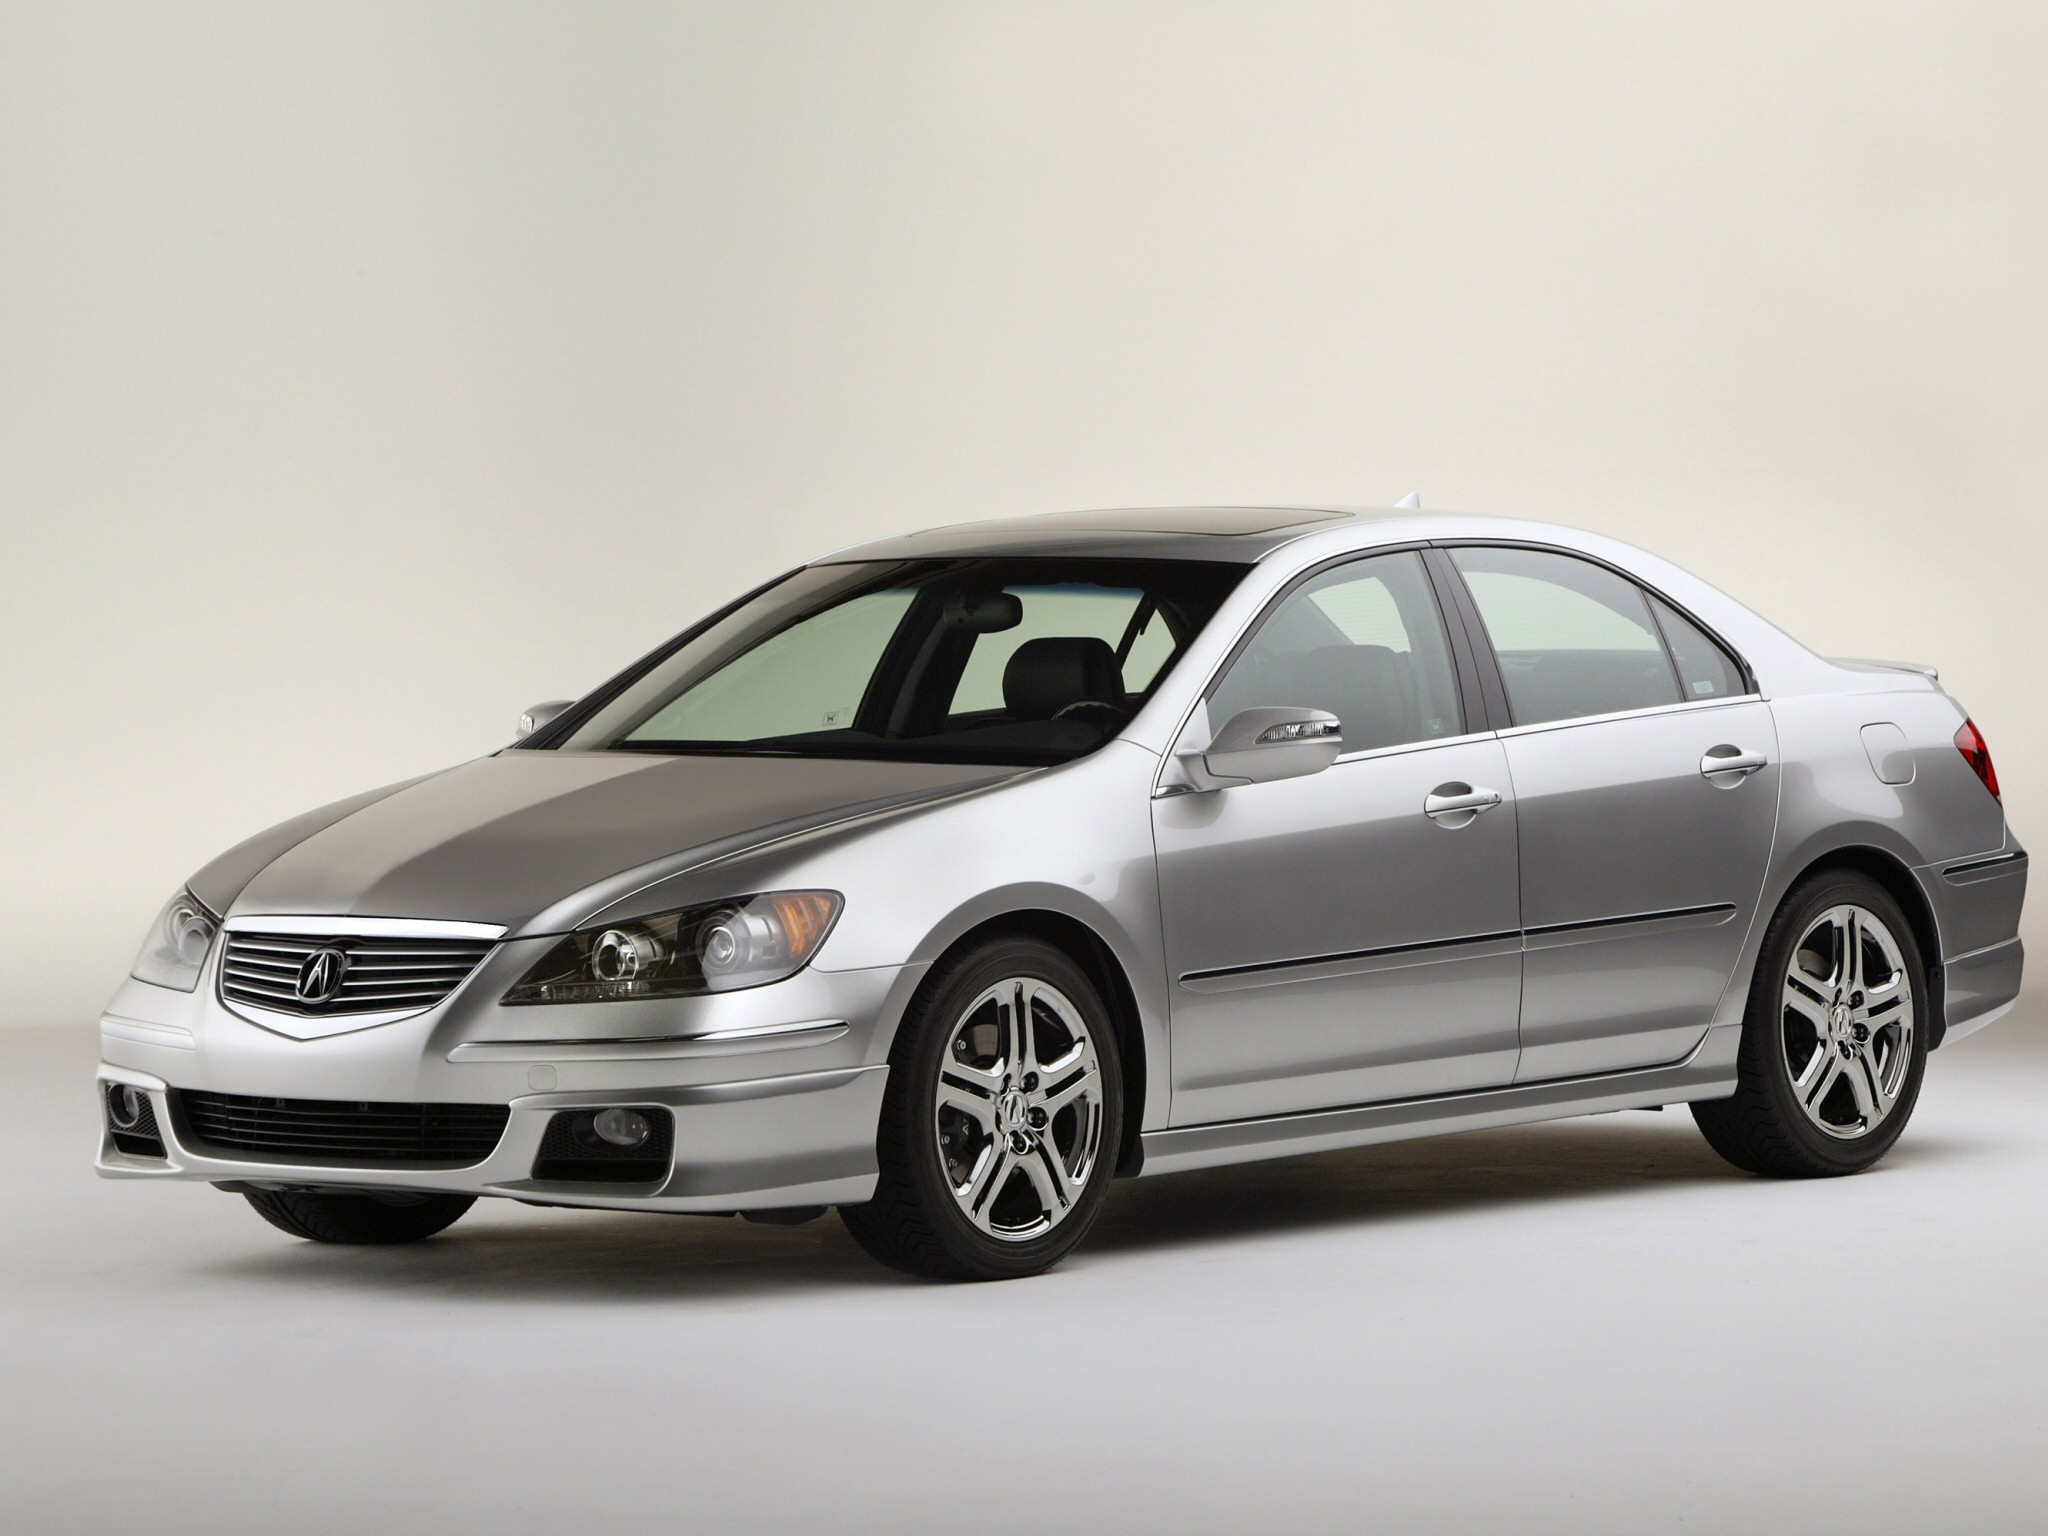 cars, auto, acura, side view, style, akura, metallic gray, grey metallic, rl High Definition image